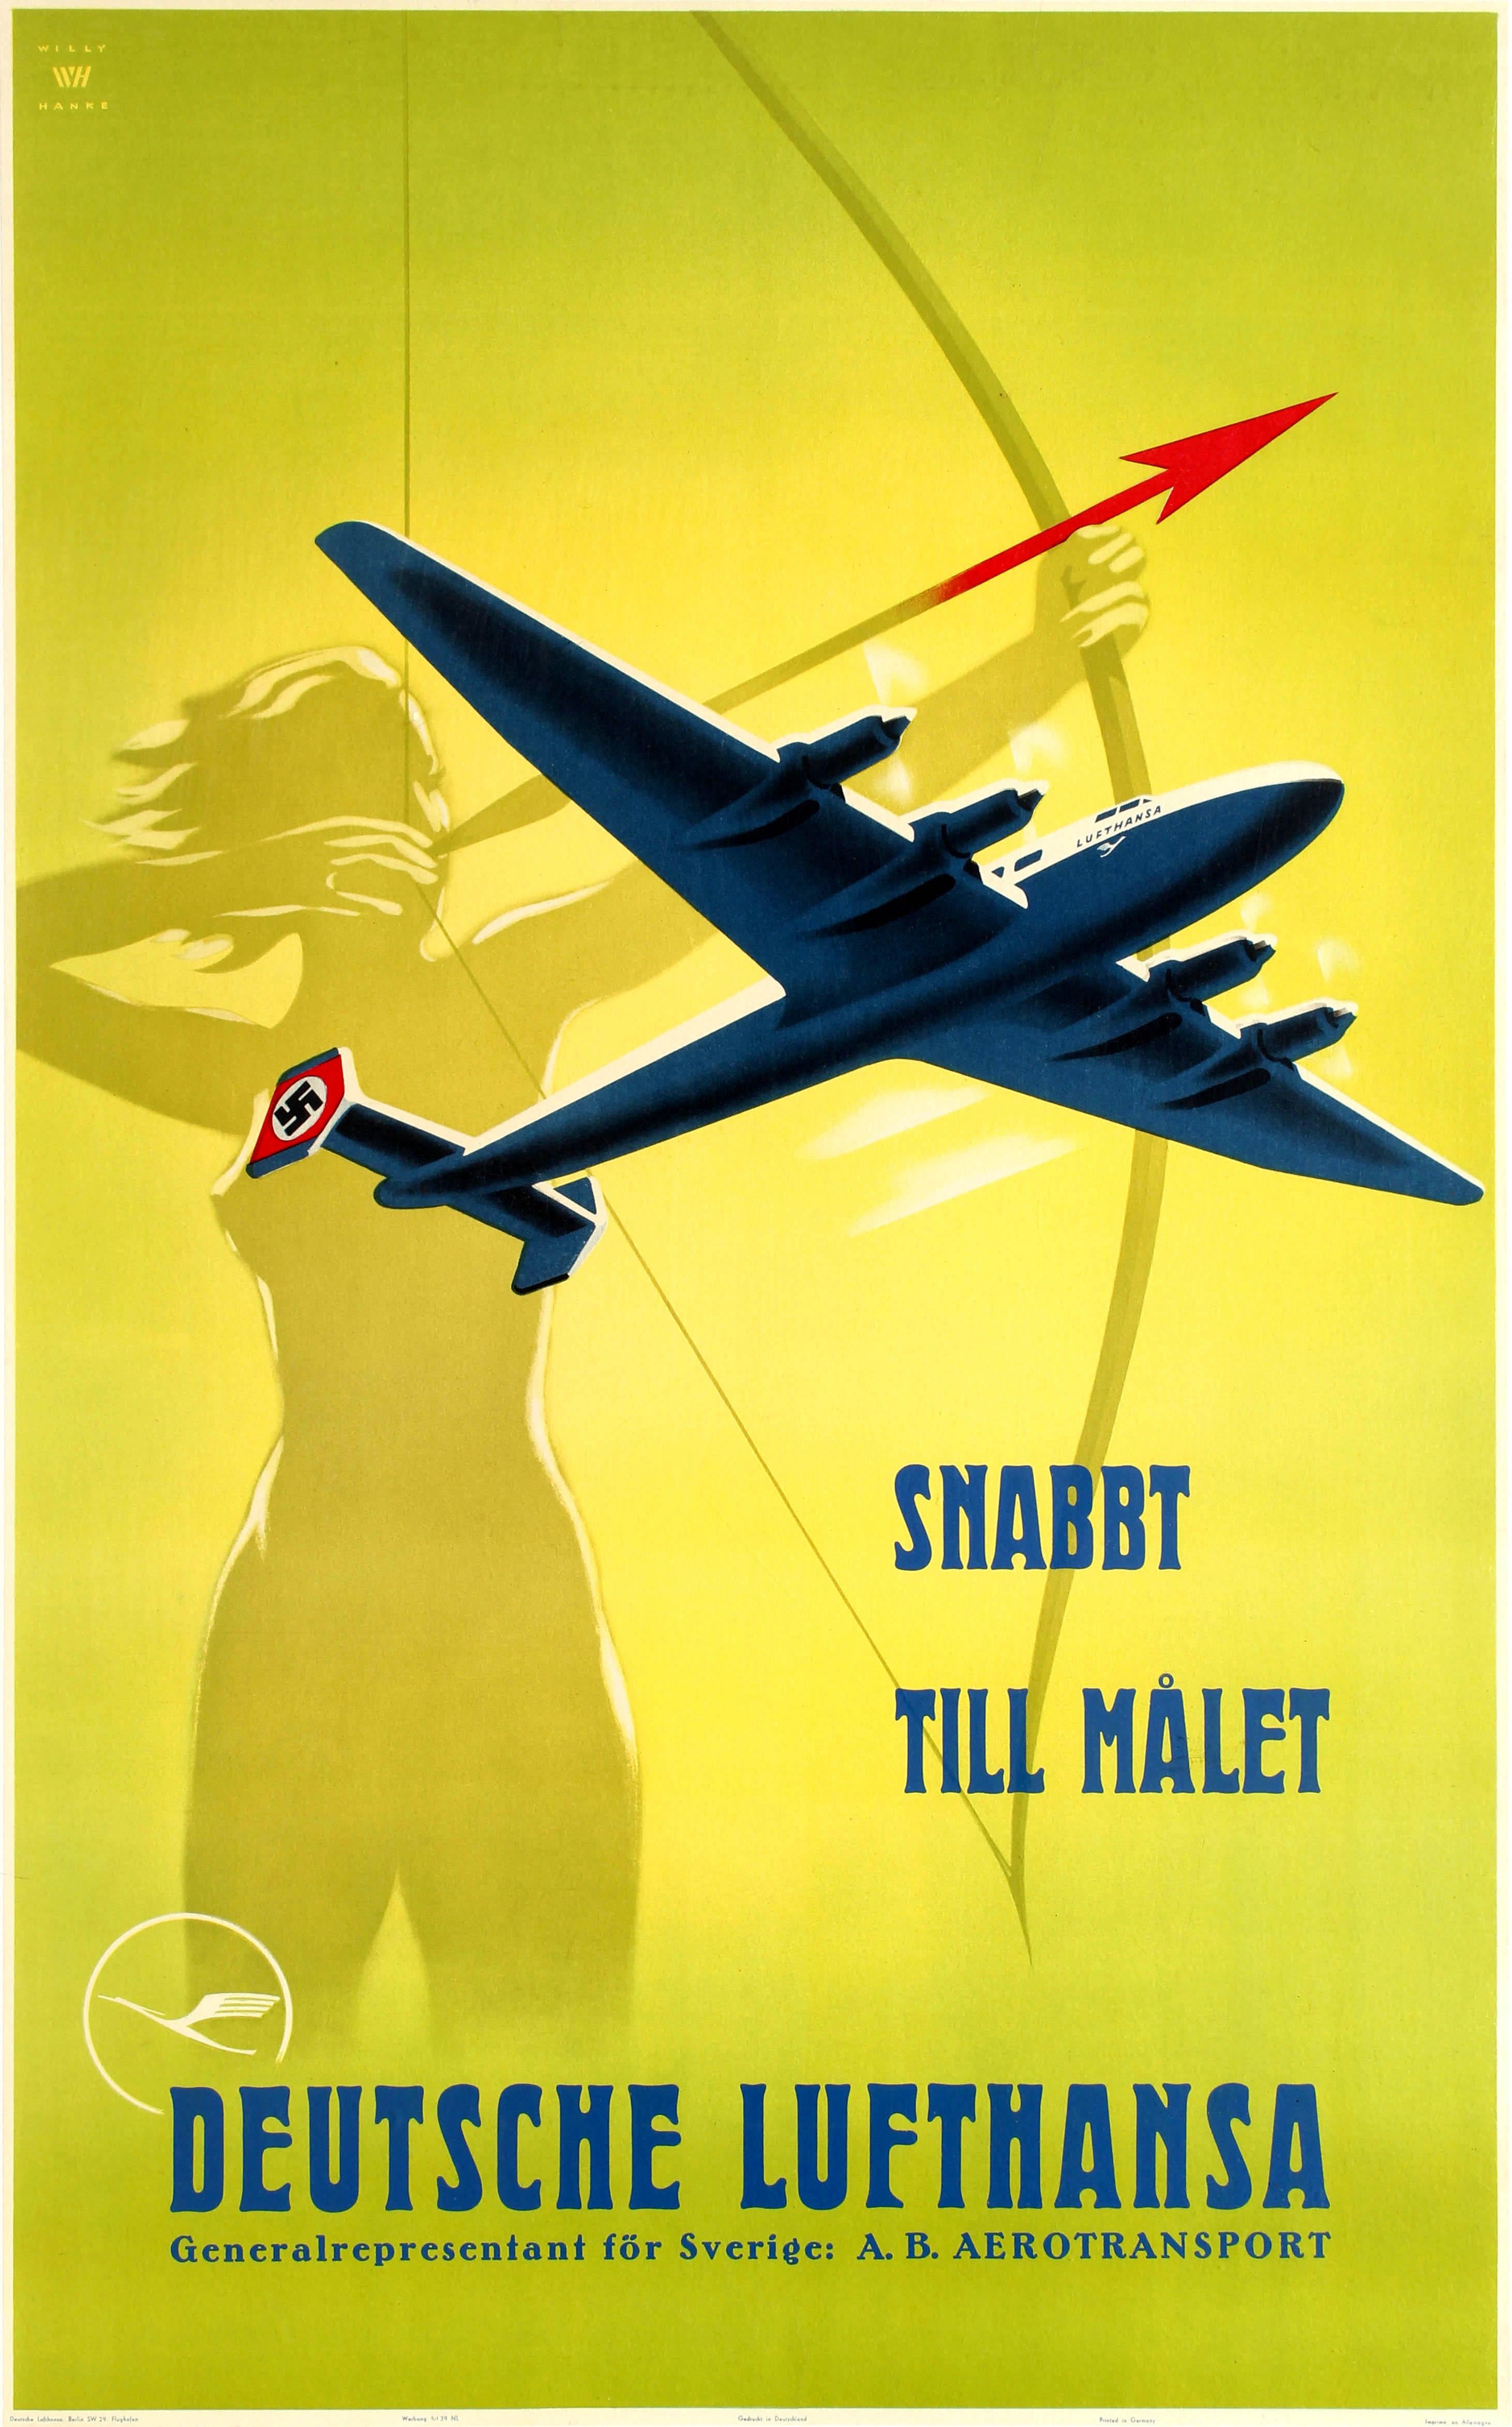 Willy Hanke Print - Original Vintage Travel Poster Advertising Deutsche Lufthansa Snabbt Till Målet